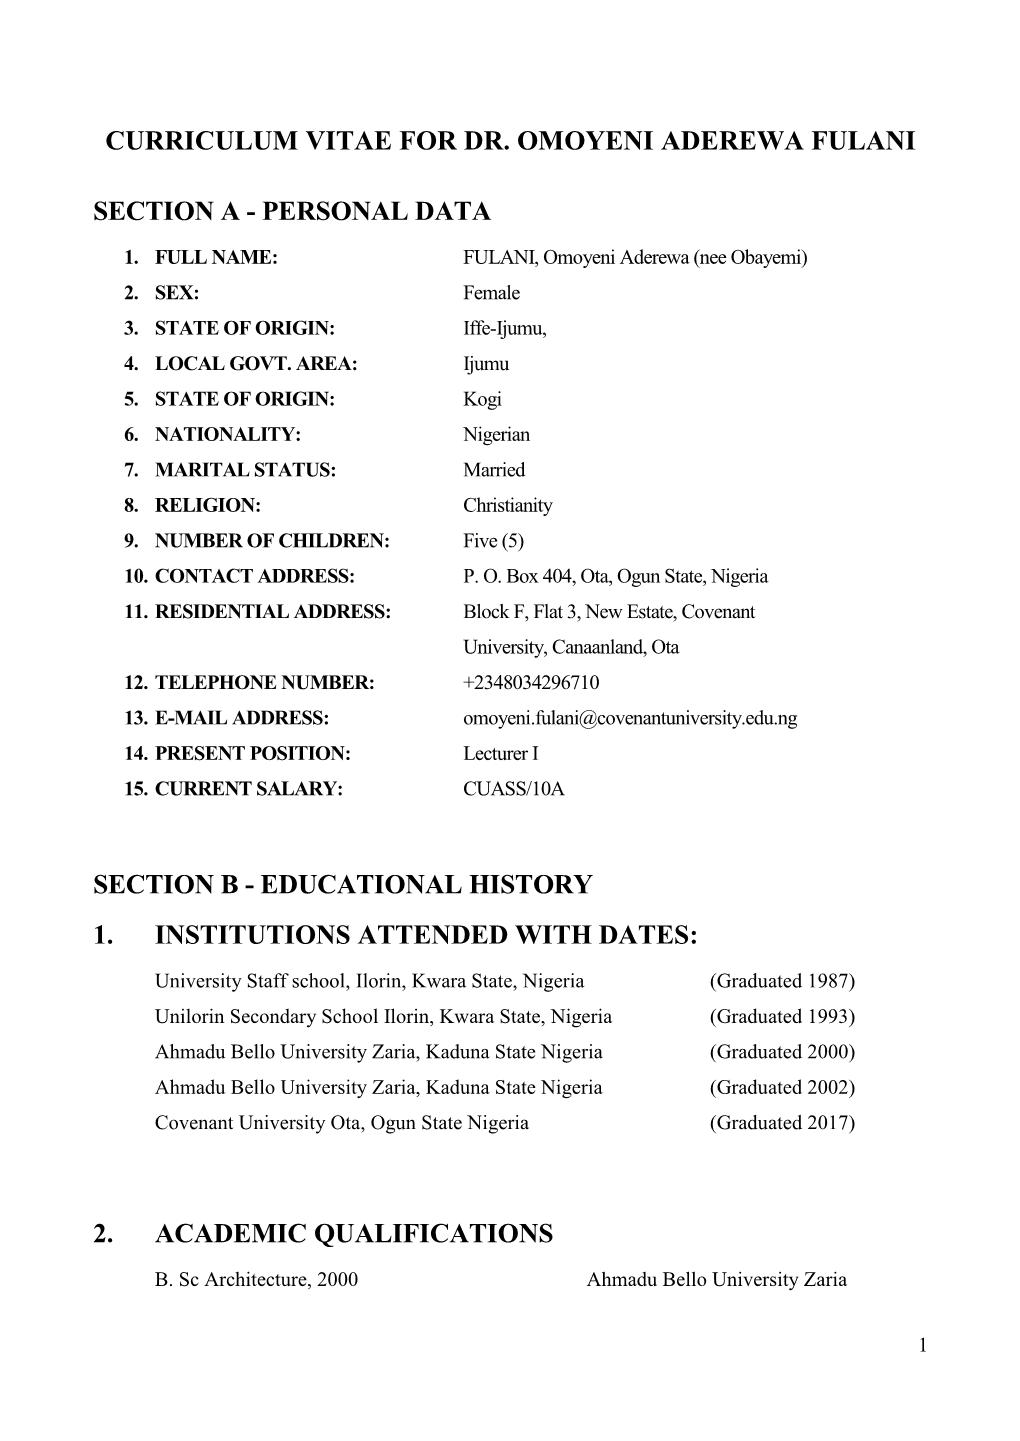 Curriculum Vitae for Dr. Omoyeni Aderewa Fulani Section A